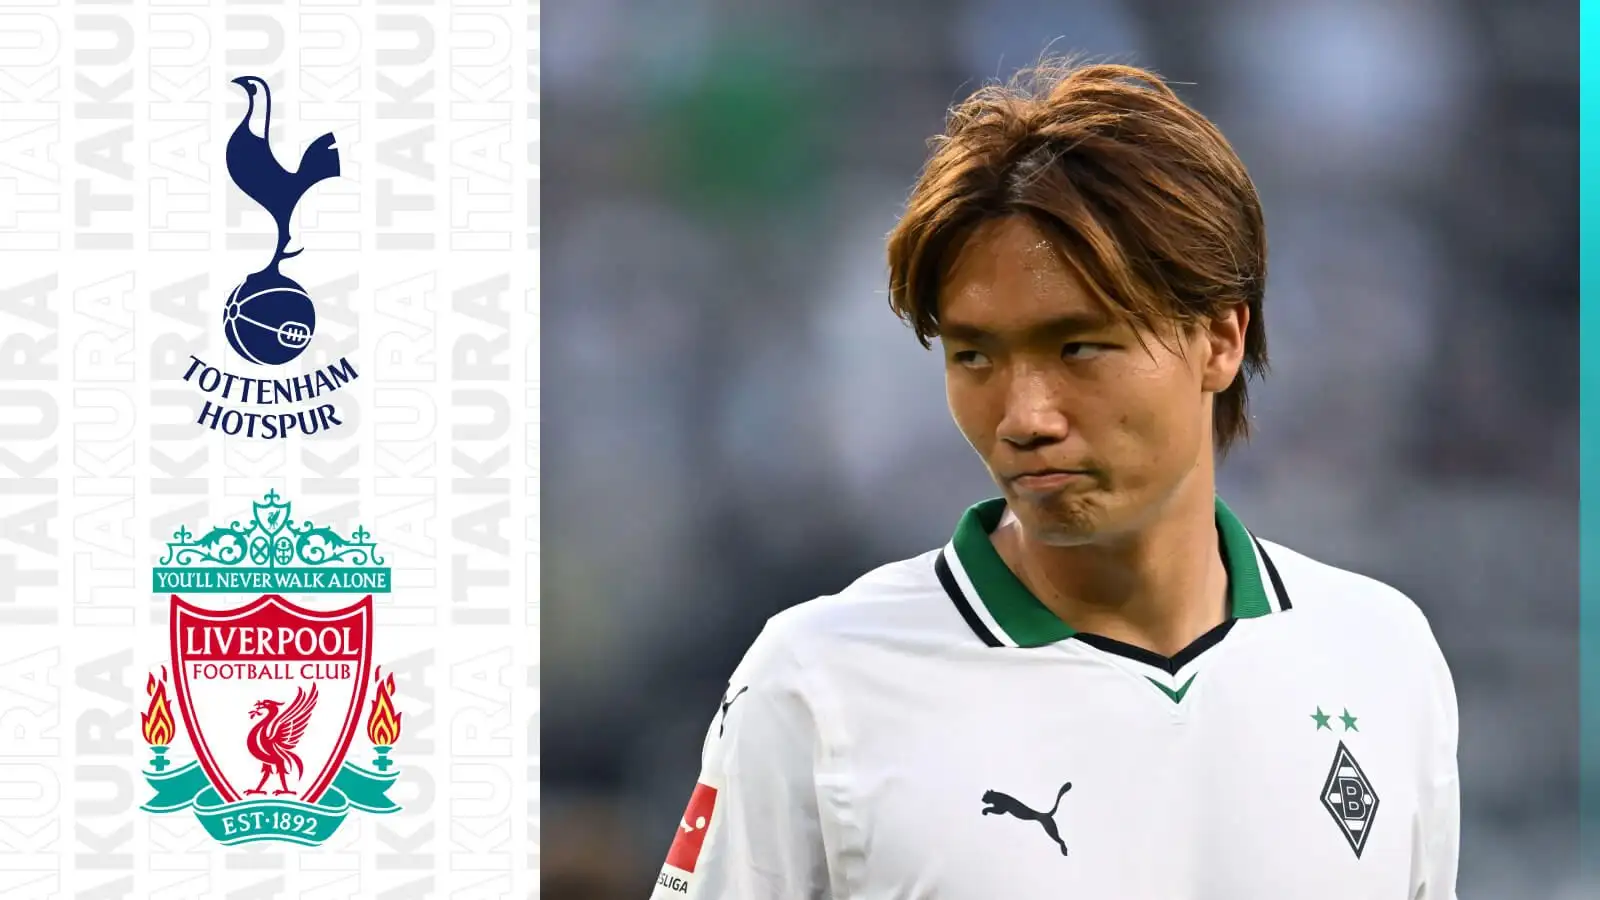 Liverpool and Tottenham are both astounded in Ko Itakura.